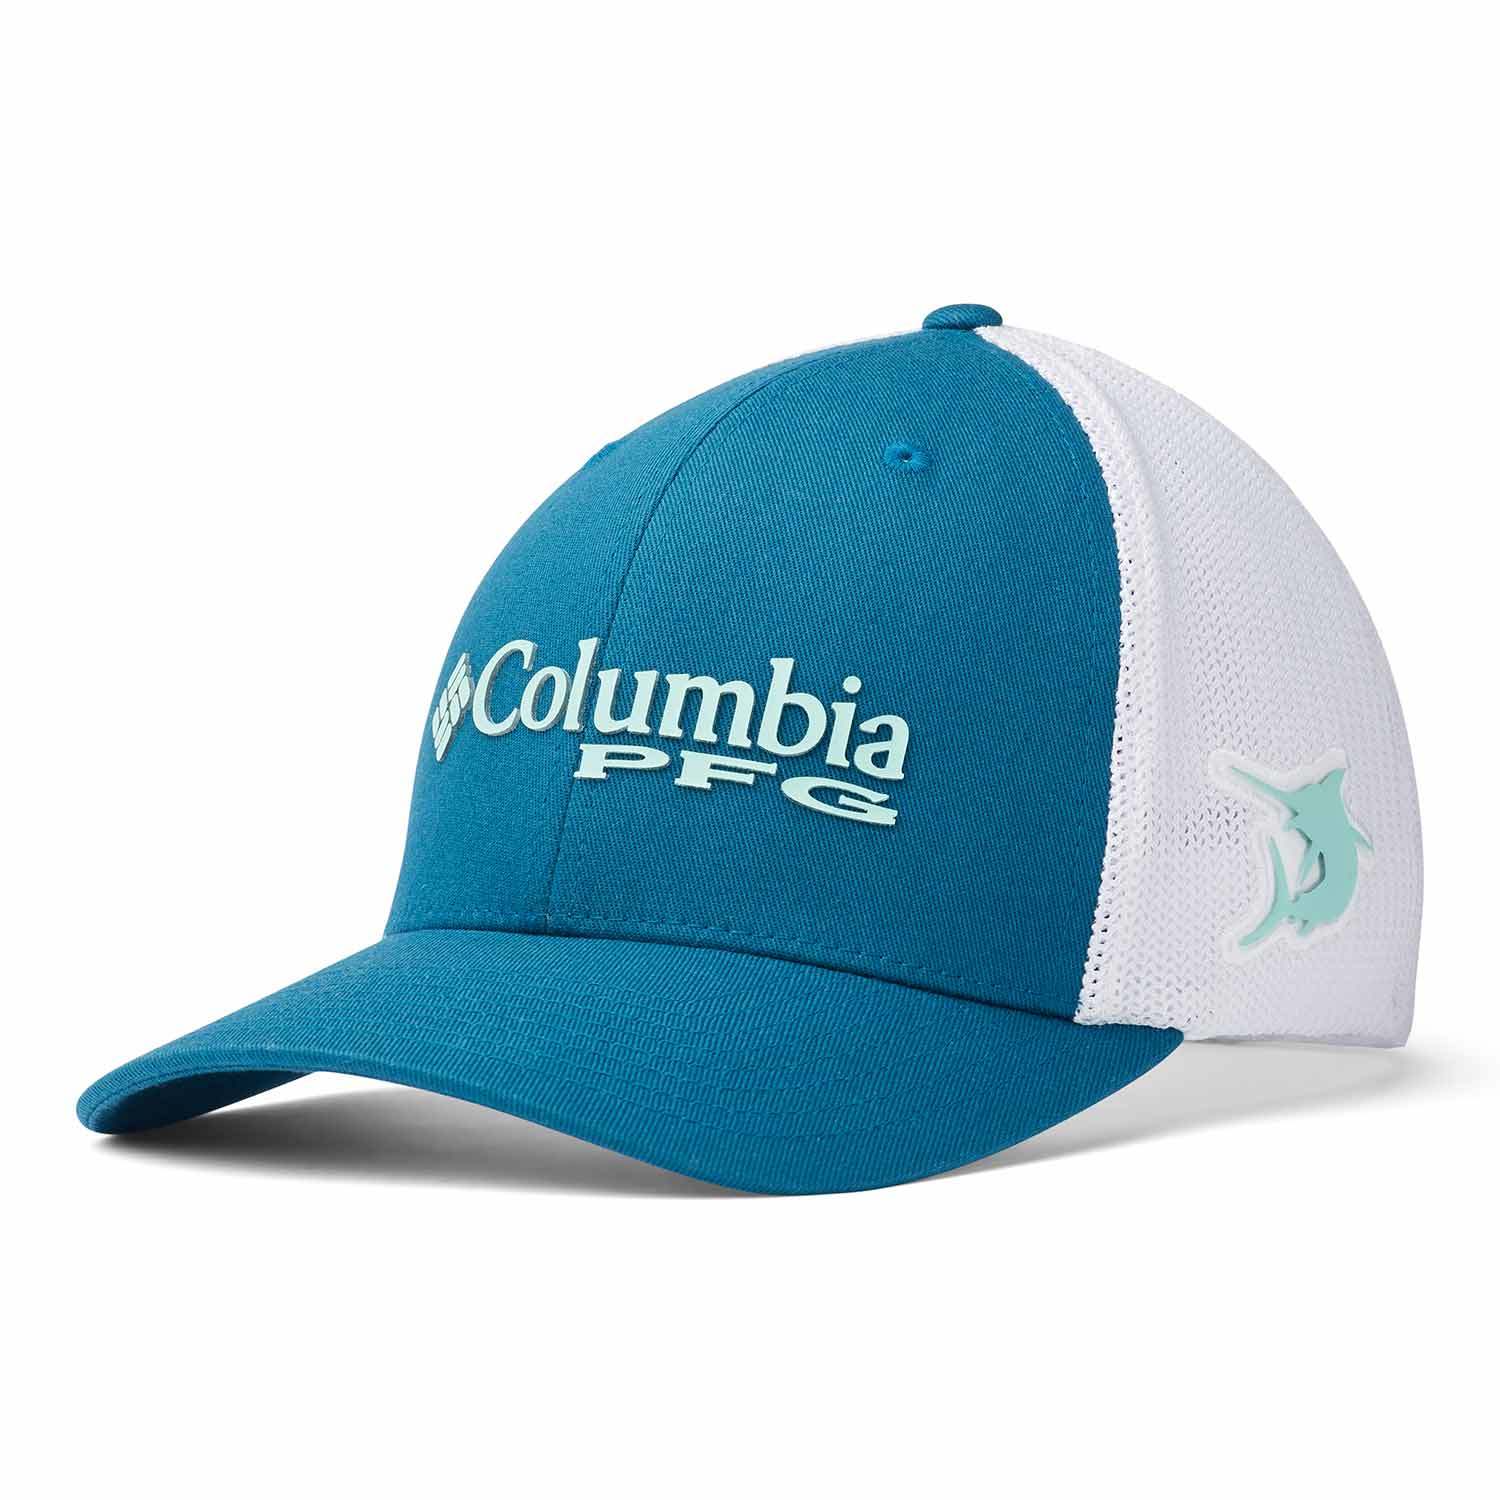 Gob Marlin Columbia Blue/White Hat